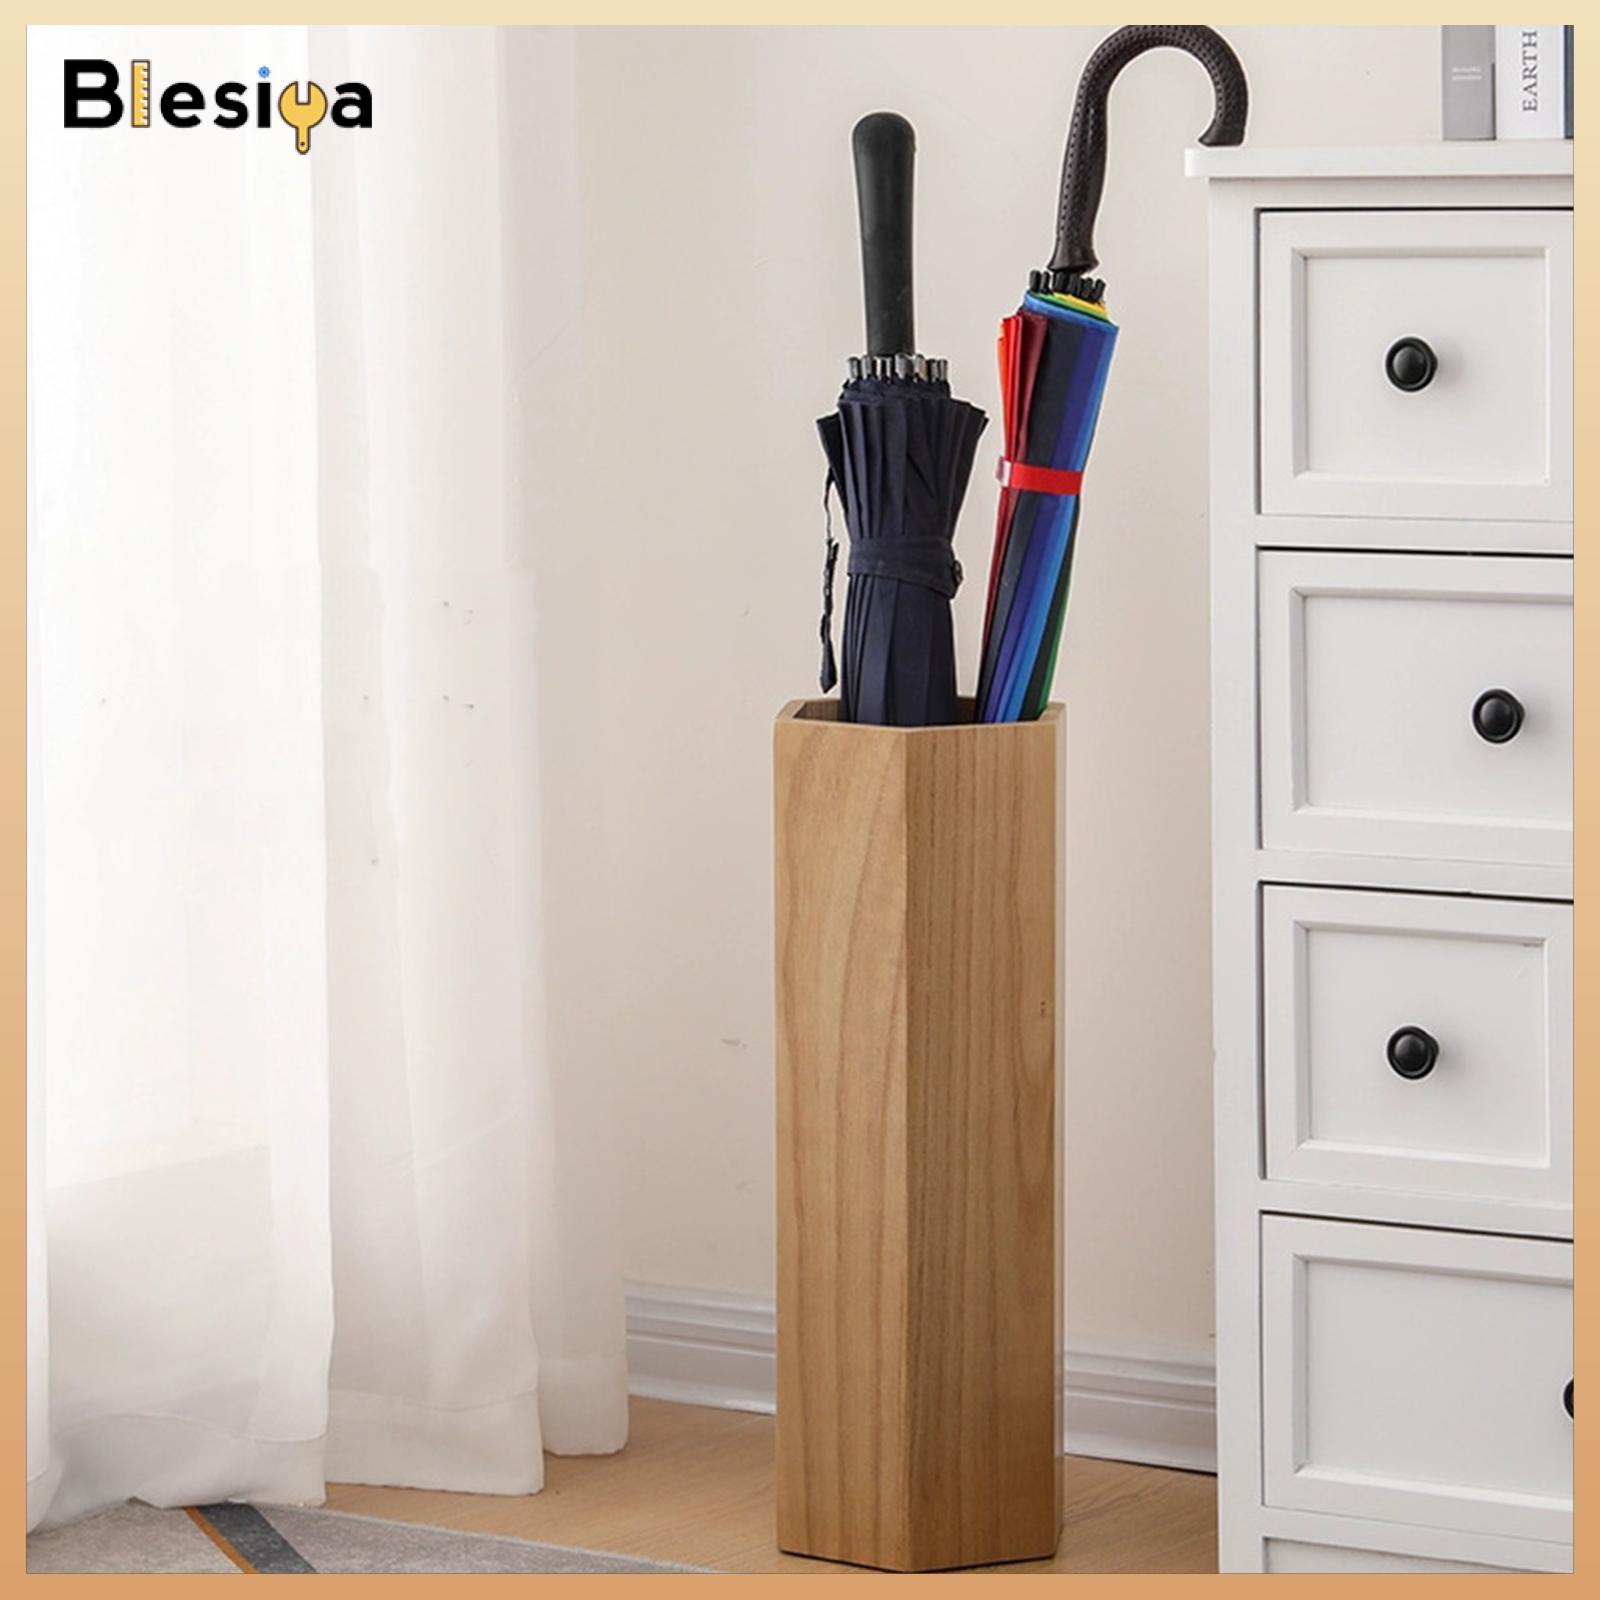 Blesiya Wooden Umbrella Holder Large Capacity Home for Supermarket